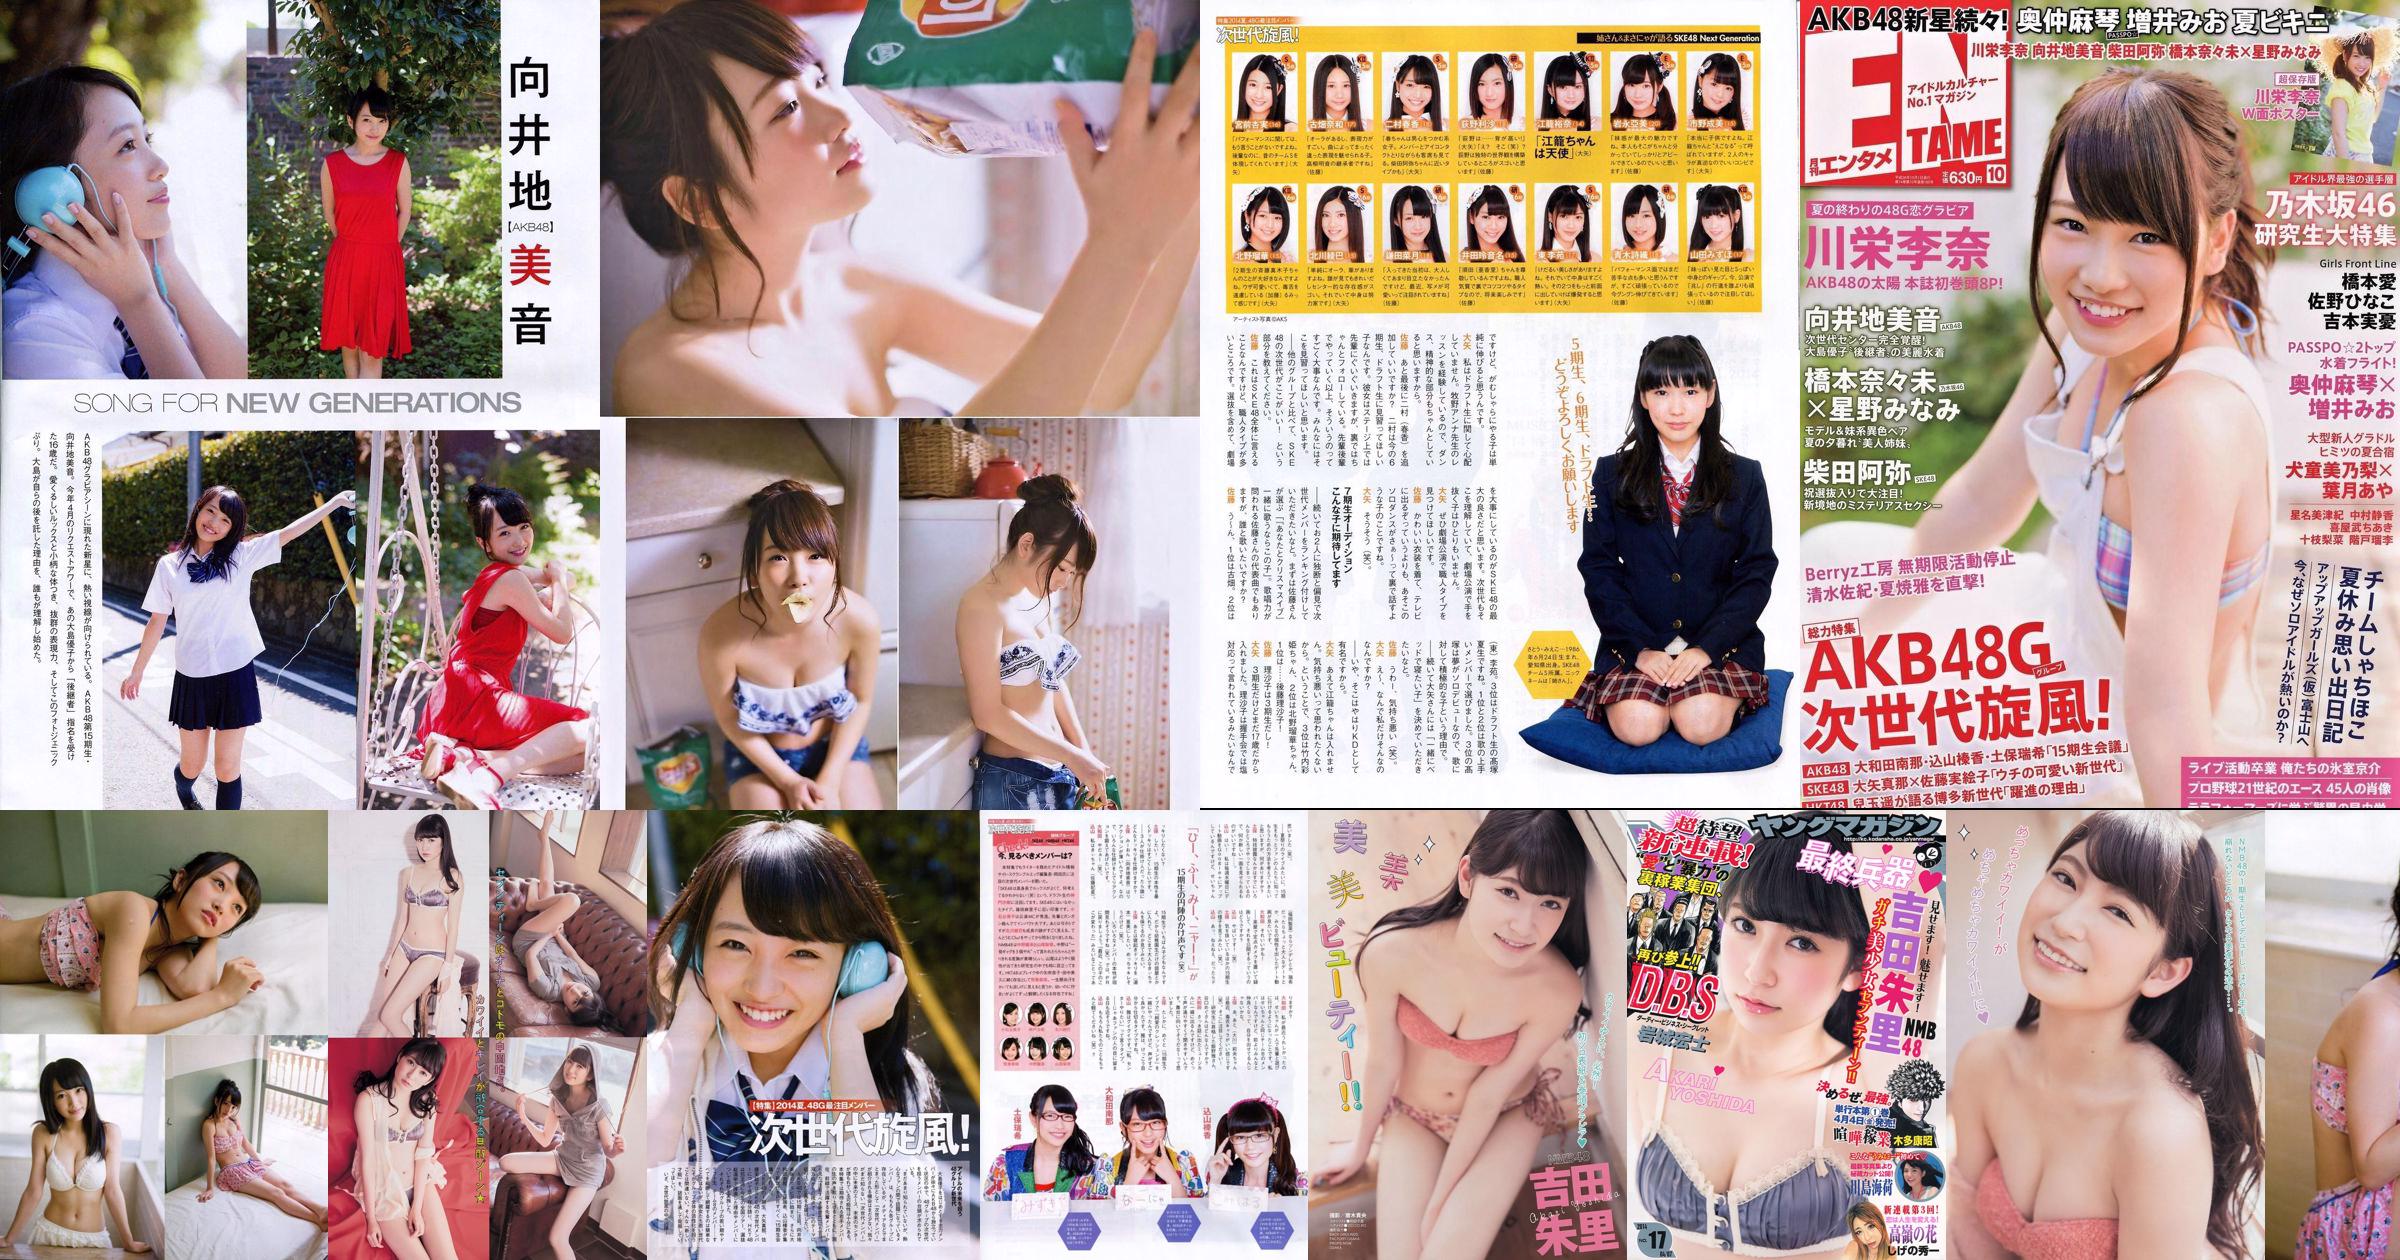 [Młody magazyn] Akari Yoshida Umika Kawashima 2014 nr 17 Zdjęcie No.e23540 Strona 1